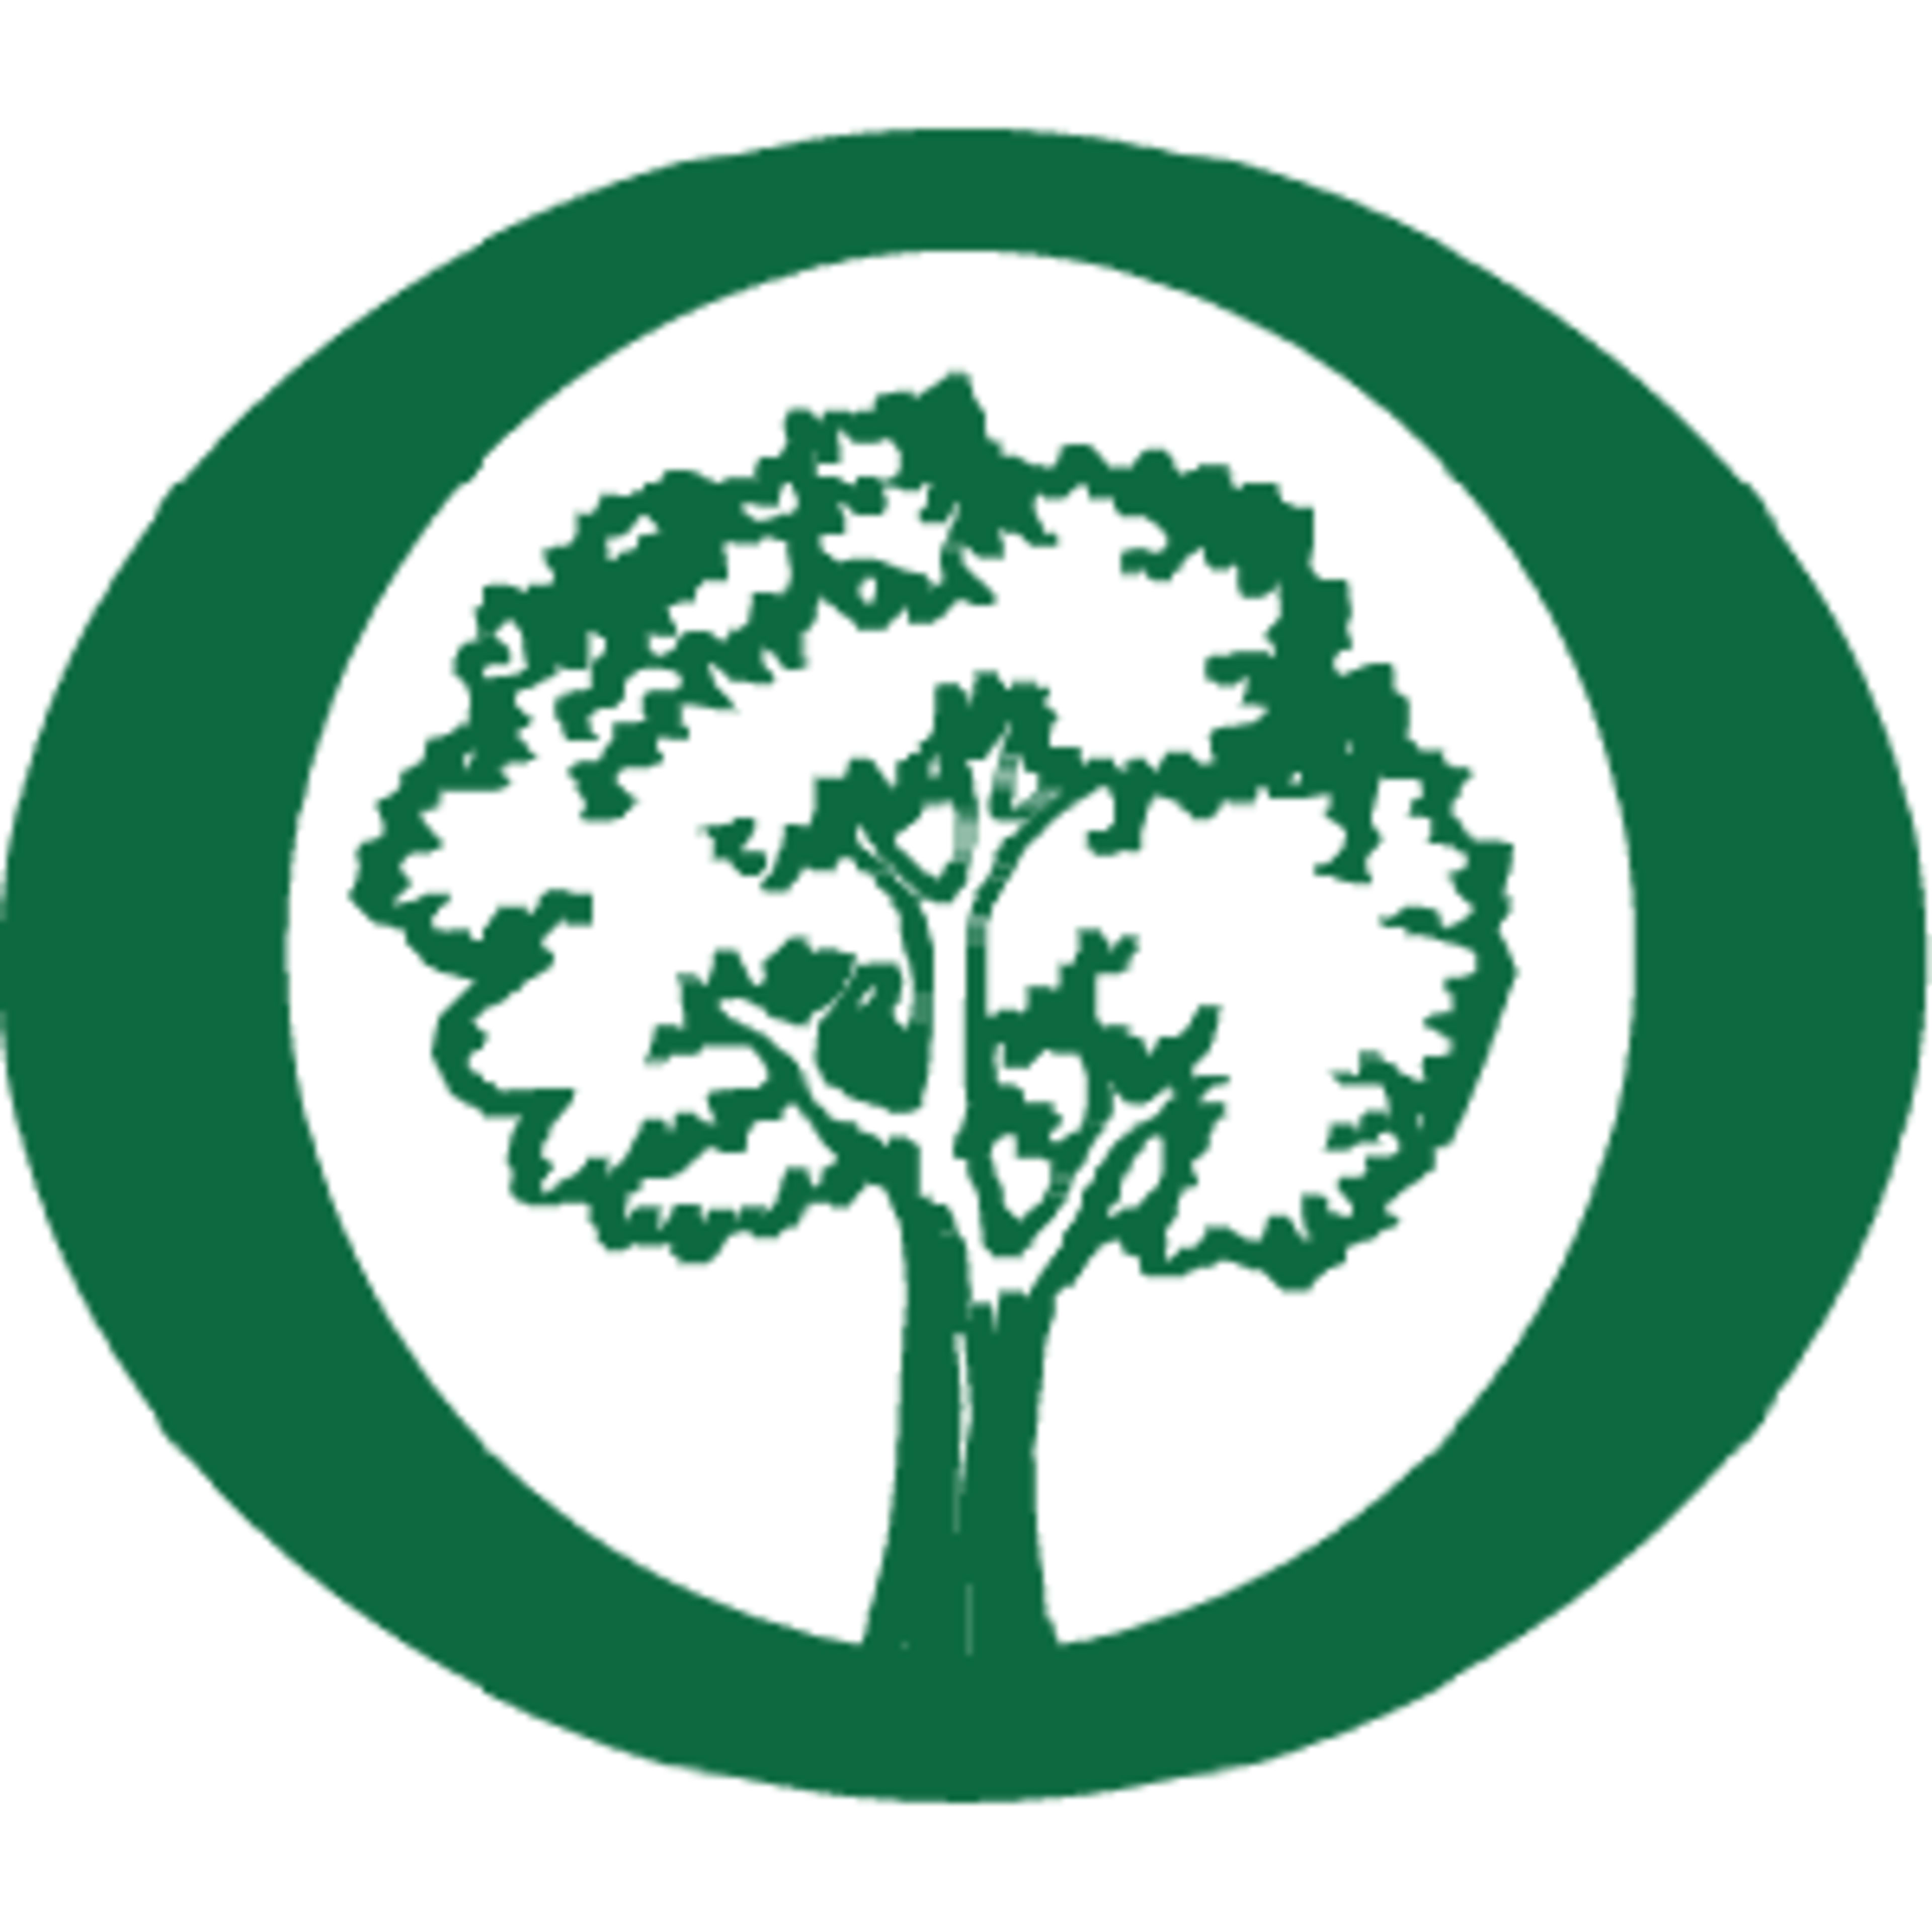 Arbor Day FoundationCode